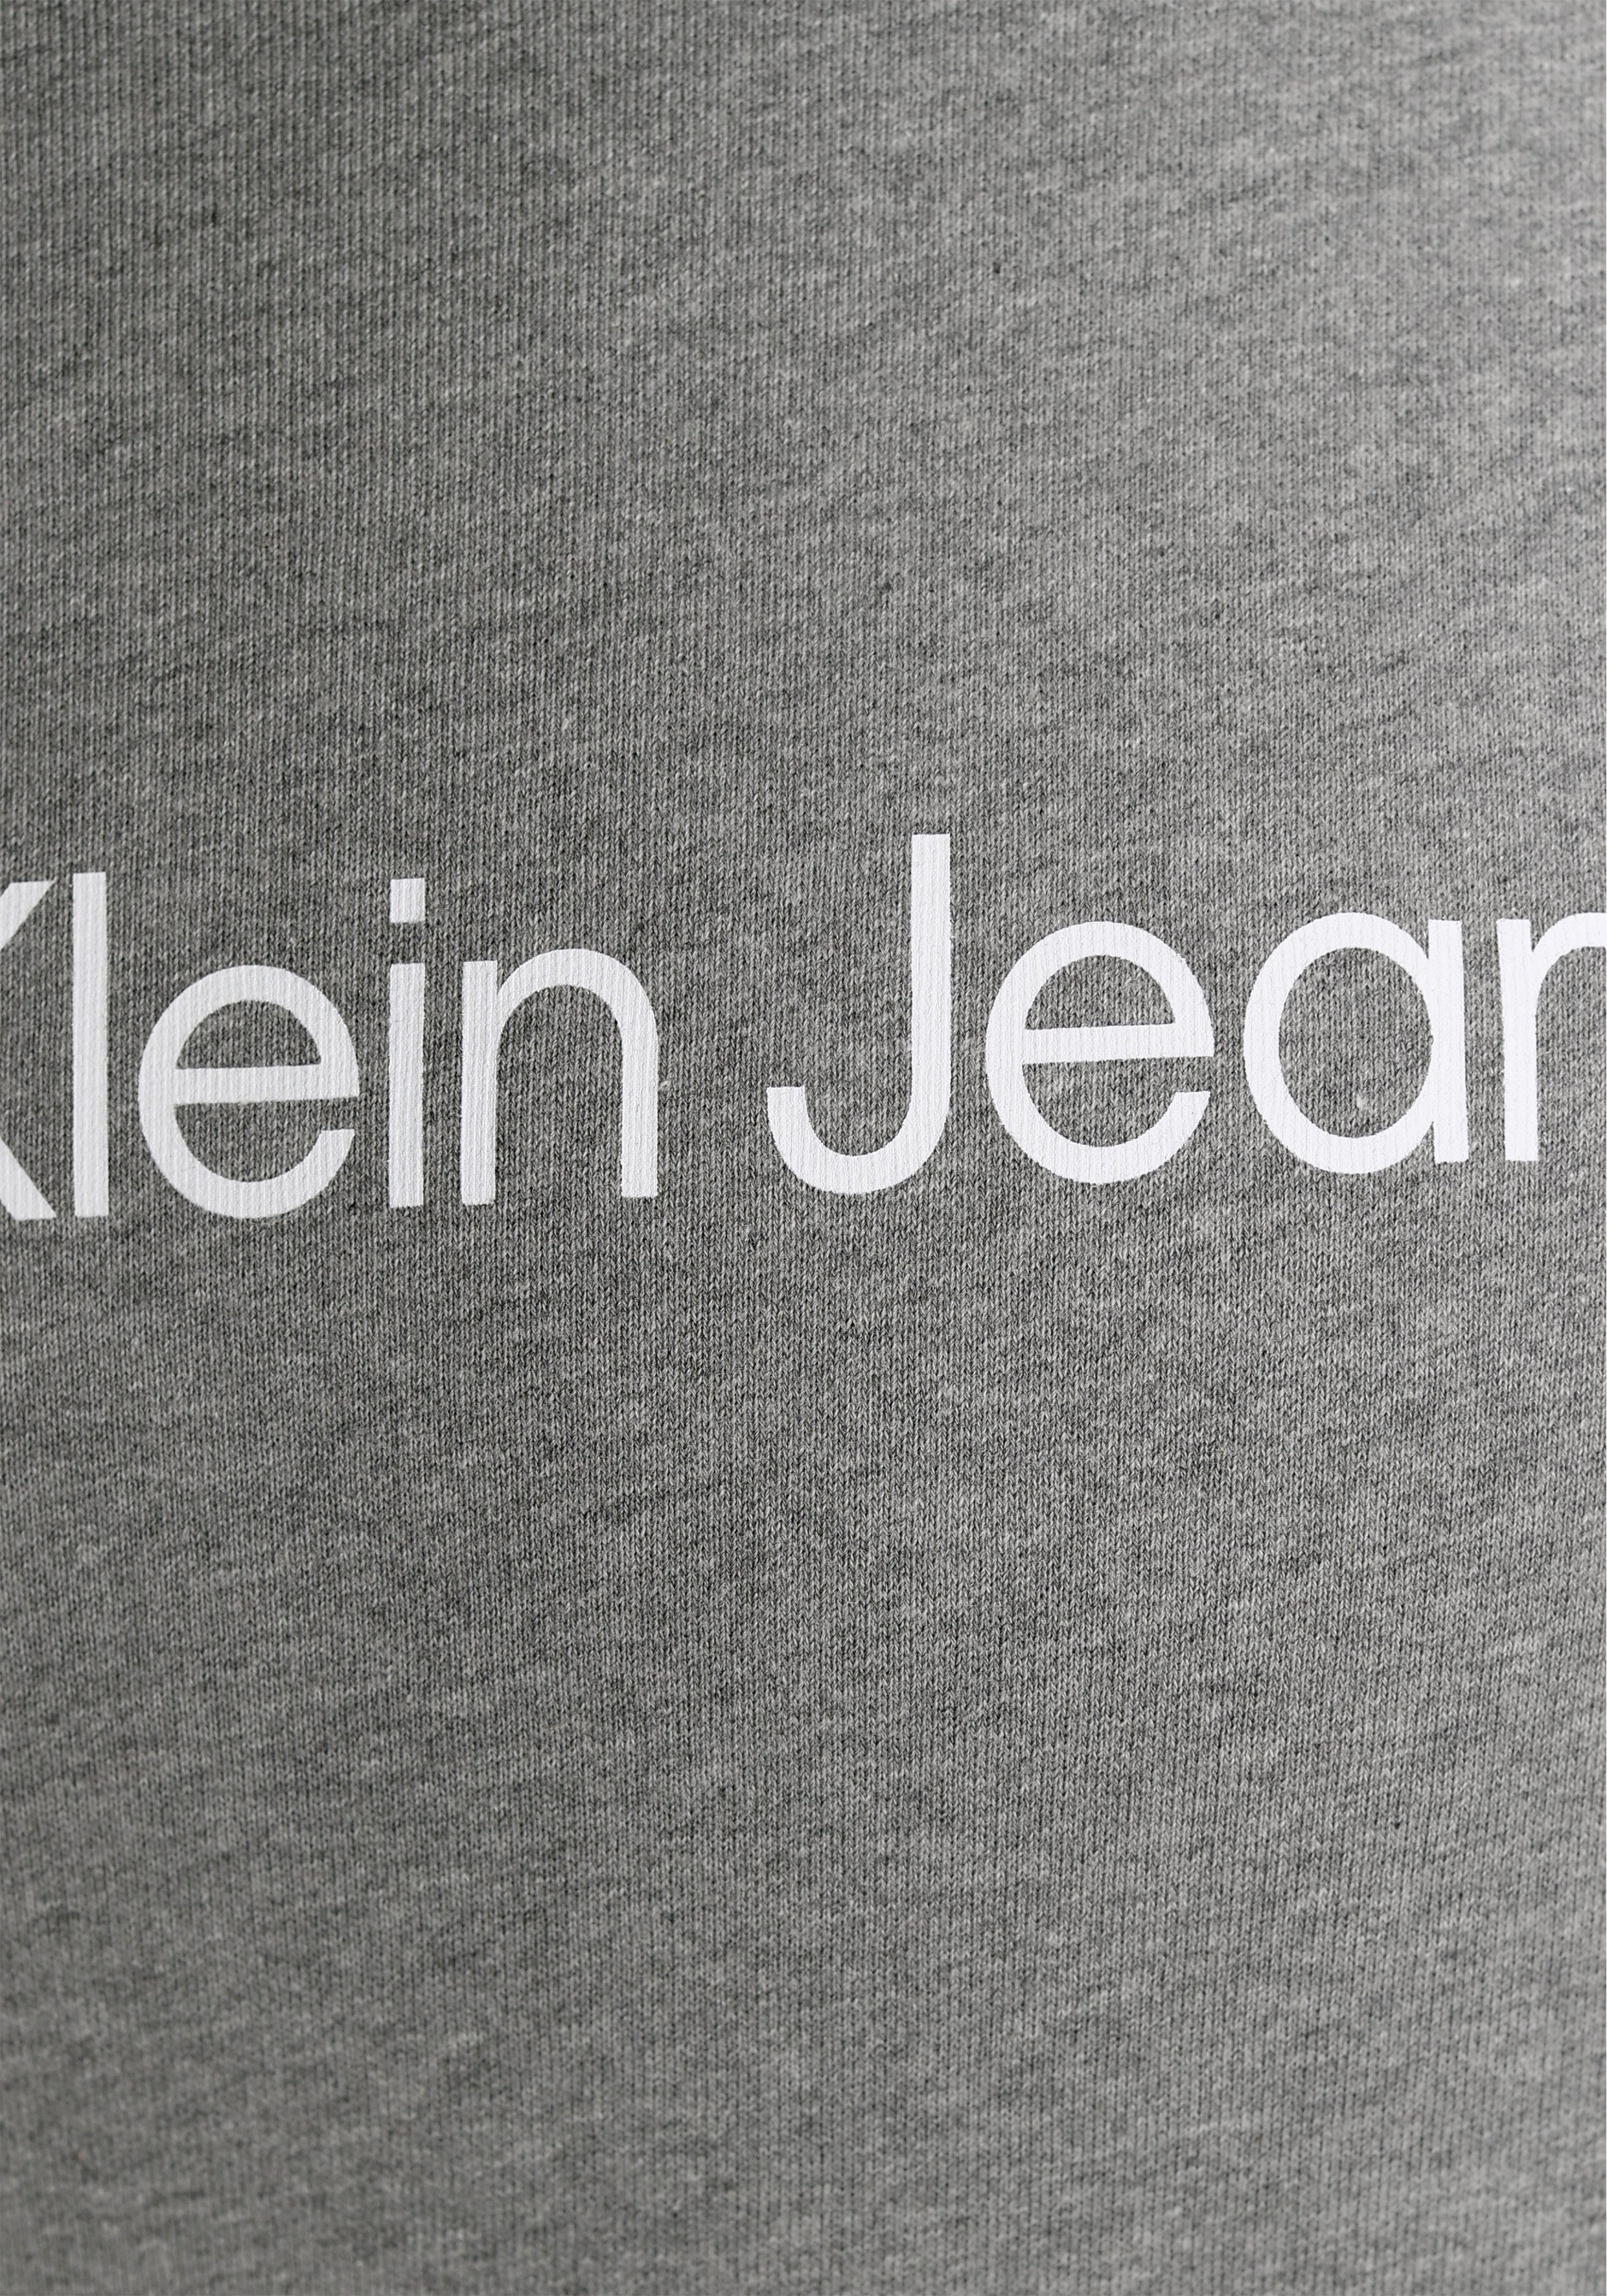 Calvin Klein Jeans Kapuzensweatshirt CORE Mid Heather INSTITUTIONAL HOODIE LOGO Grey